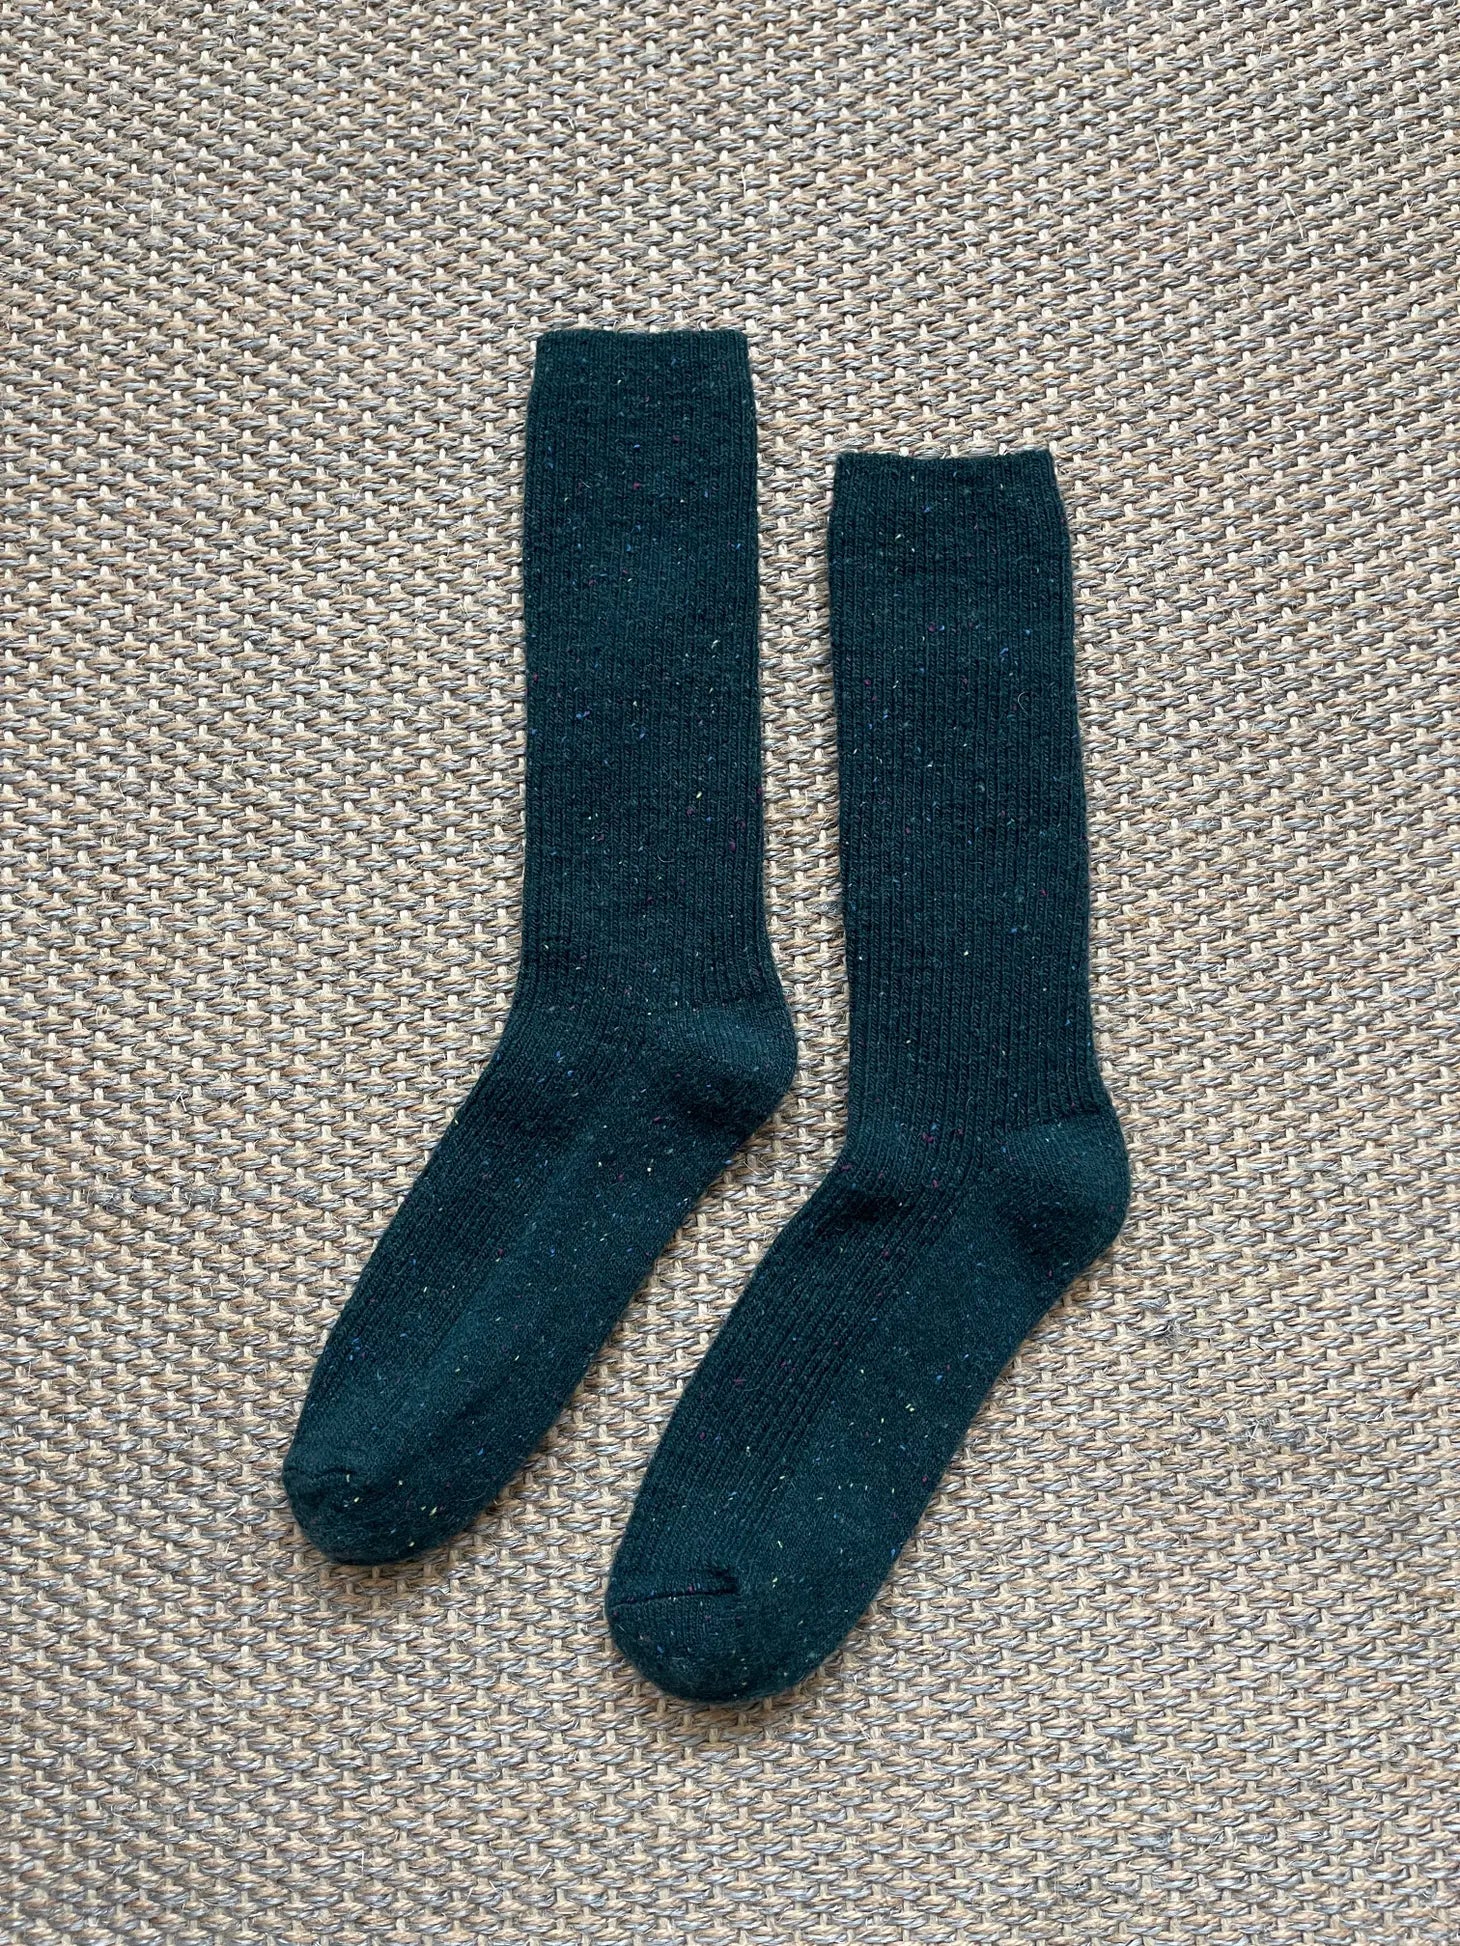 Shop Wool Socks, Clothing & Accessories